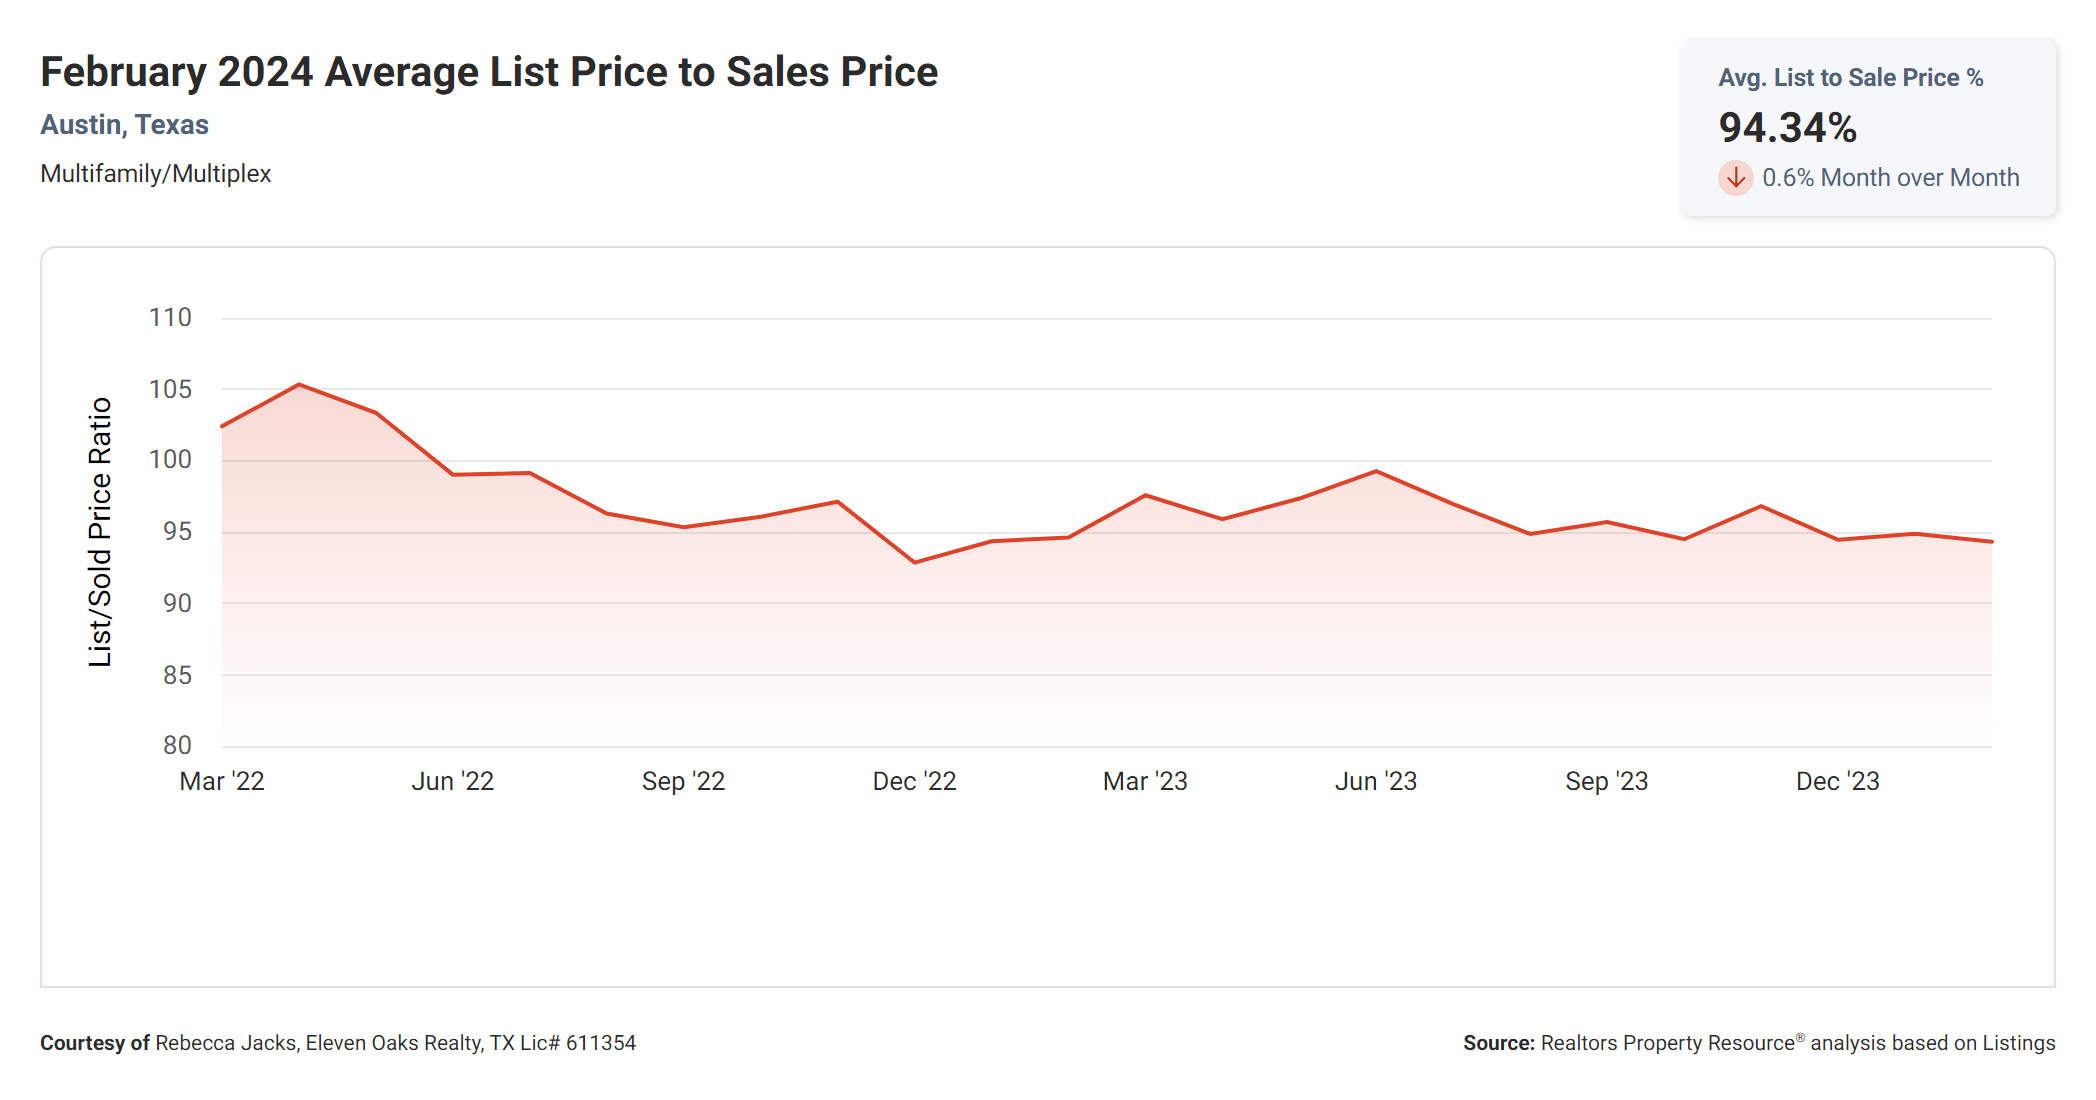 February 2024 Austin tx multi family average list price to sales price